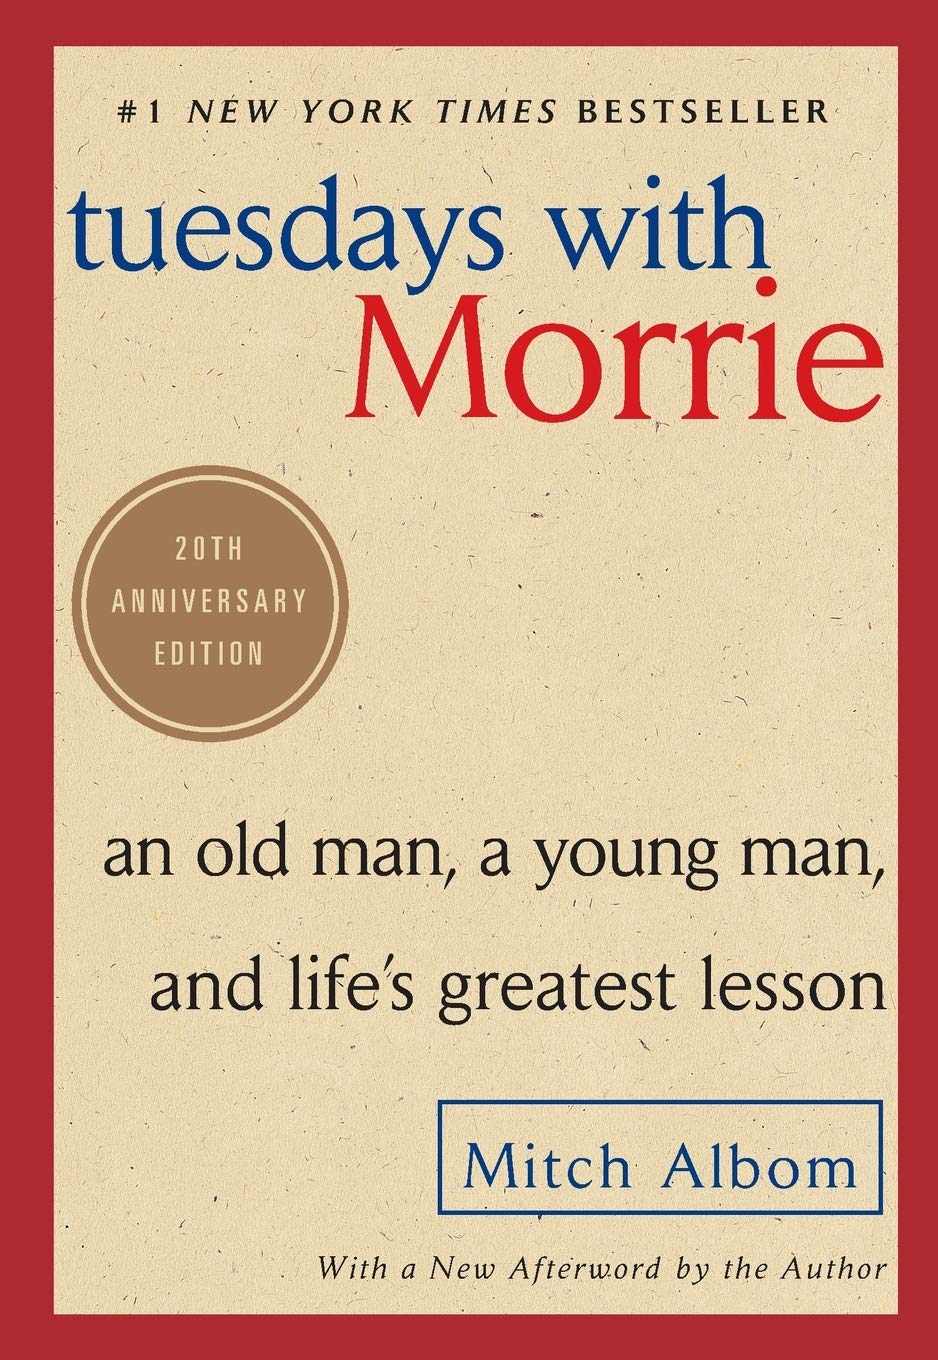 Tuesdays with morrie by mitch albom pdf free pdf